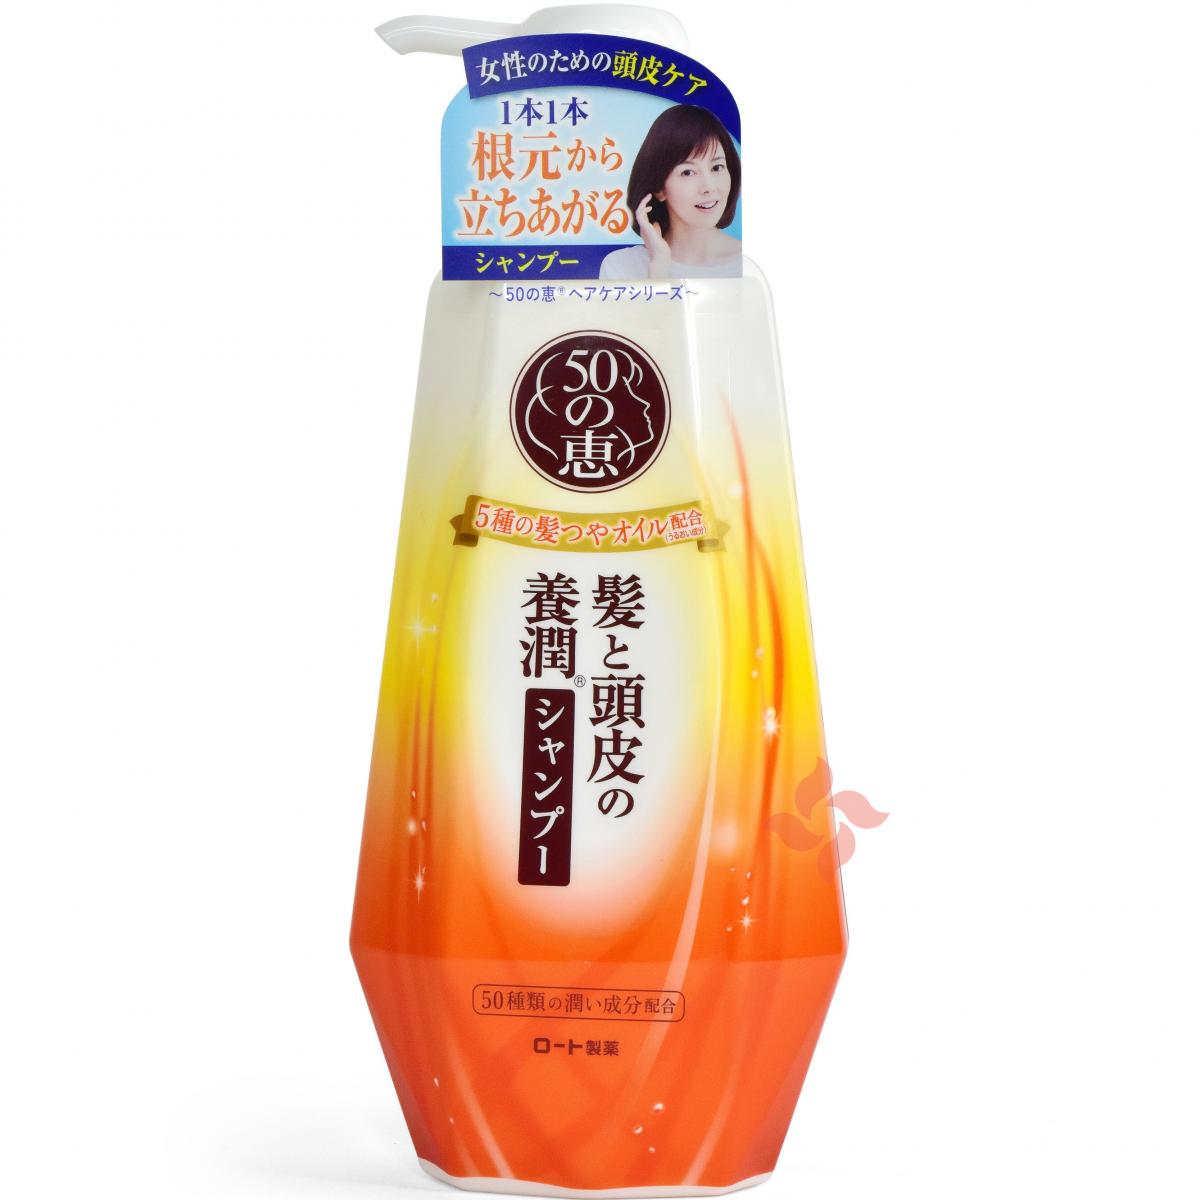 Aging Hair Care Shampoo 400ml WhiteOrange - 45690 (Parallel import) SK